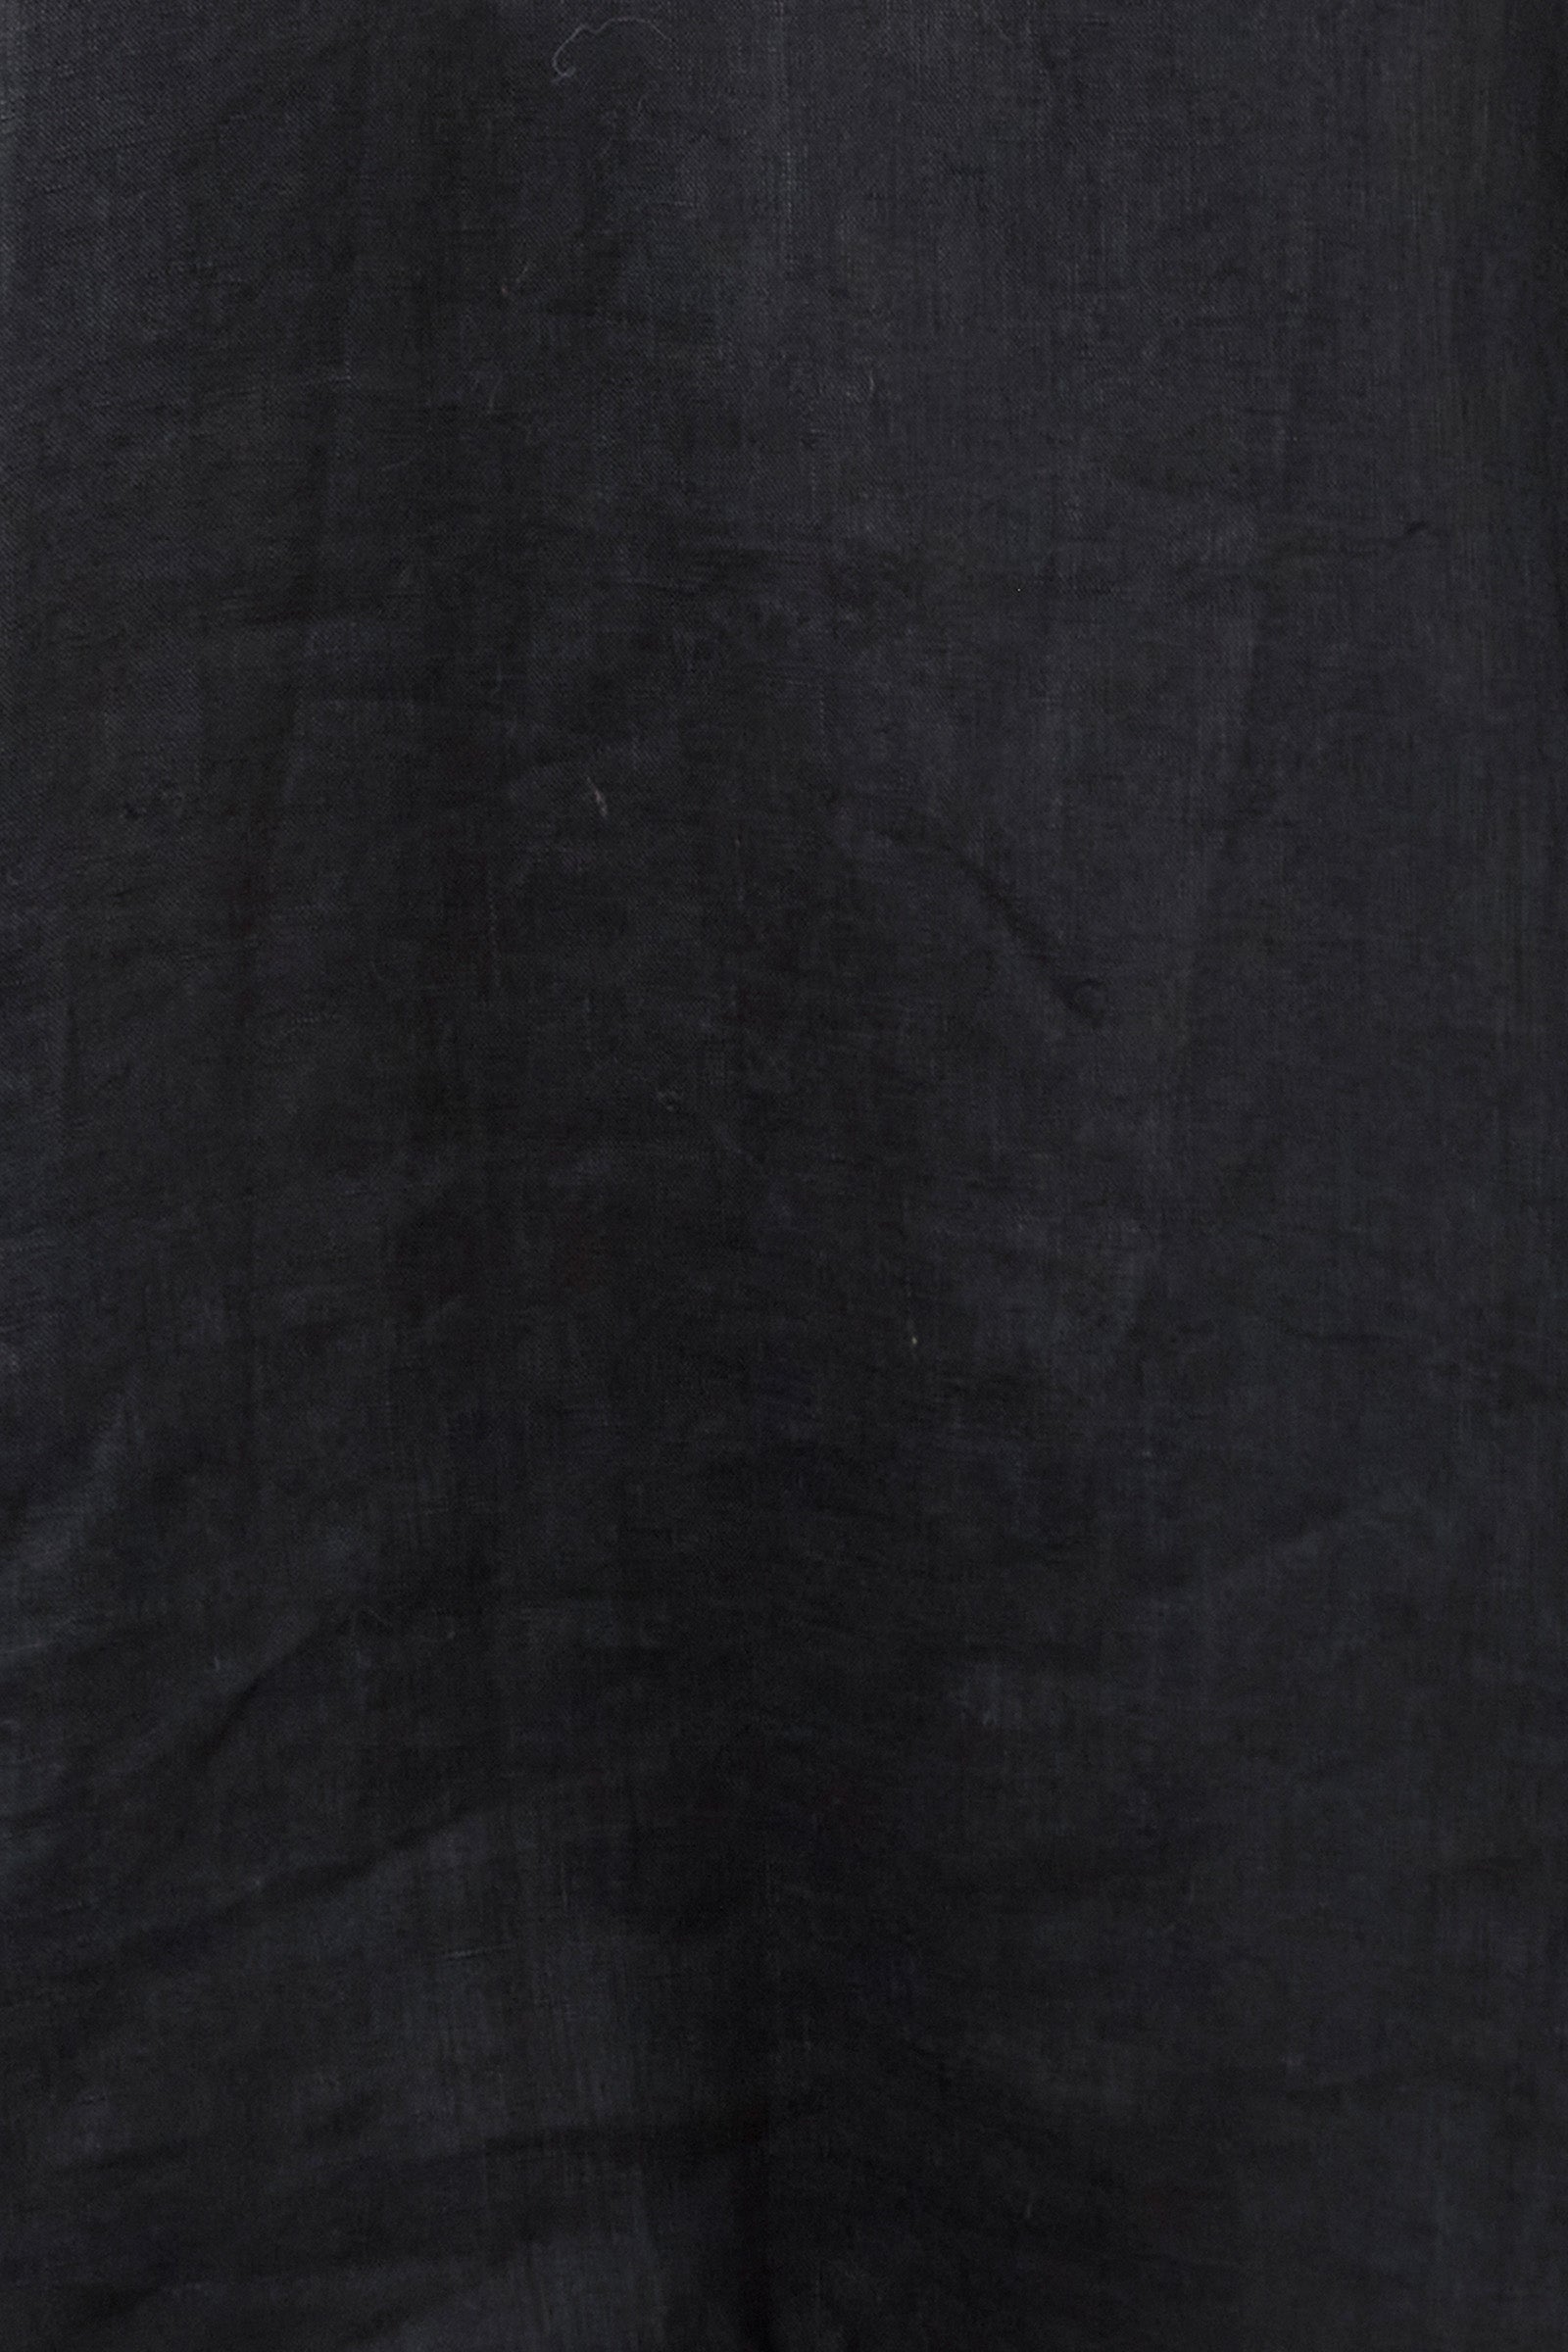 Nama Shirt Dress - Ebony - eb&ive Clothing - Dress Maxi Linen